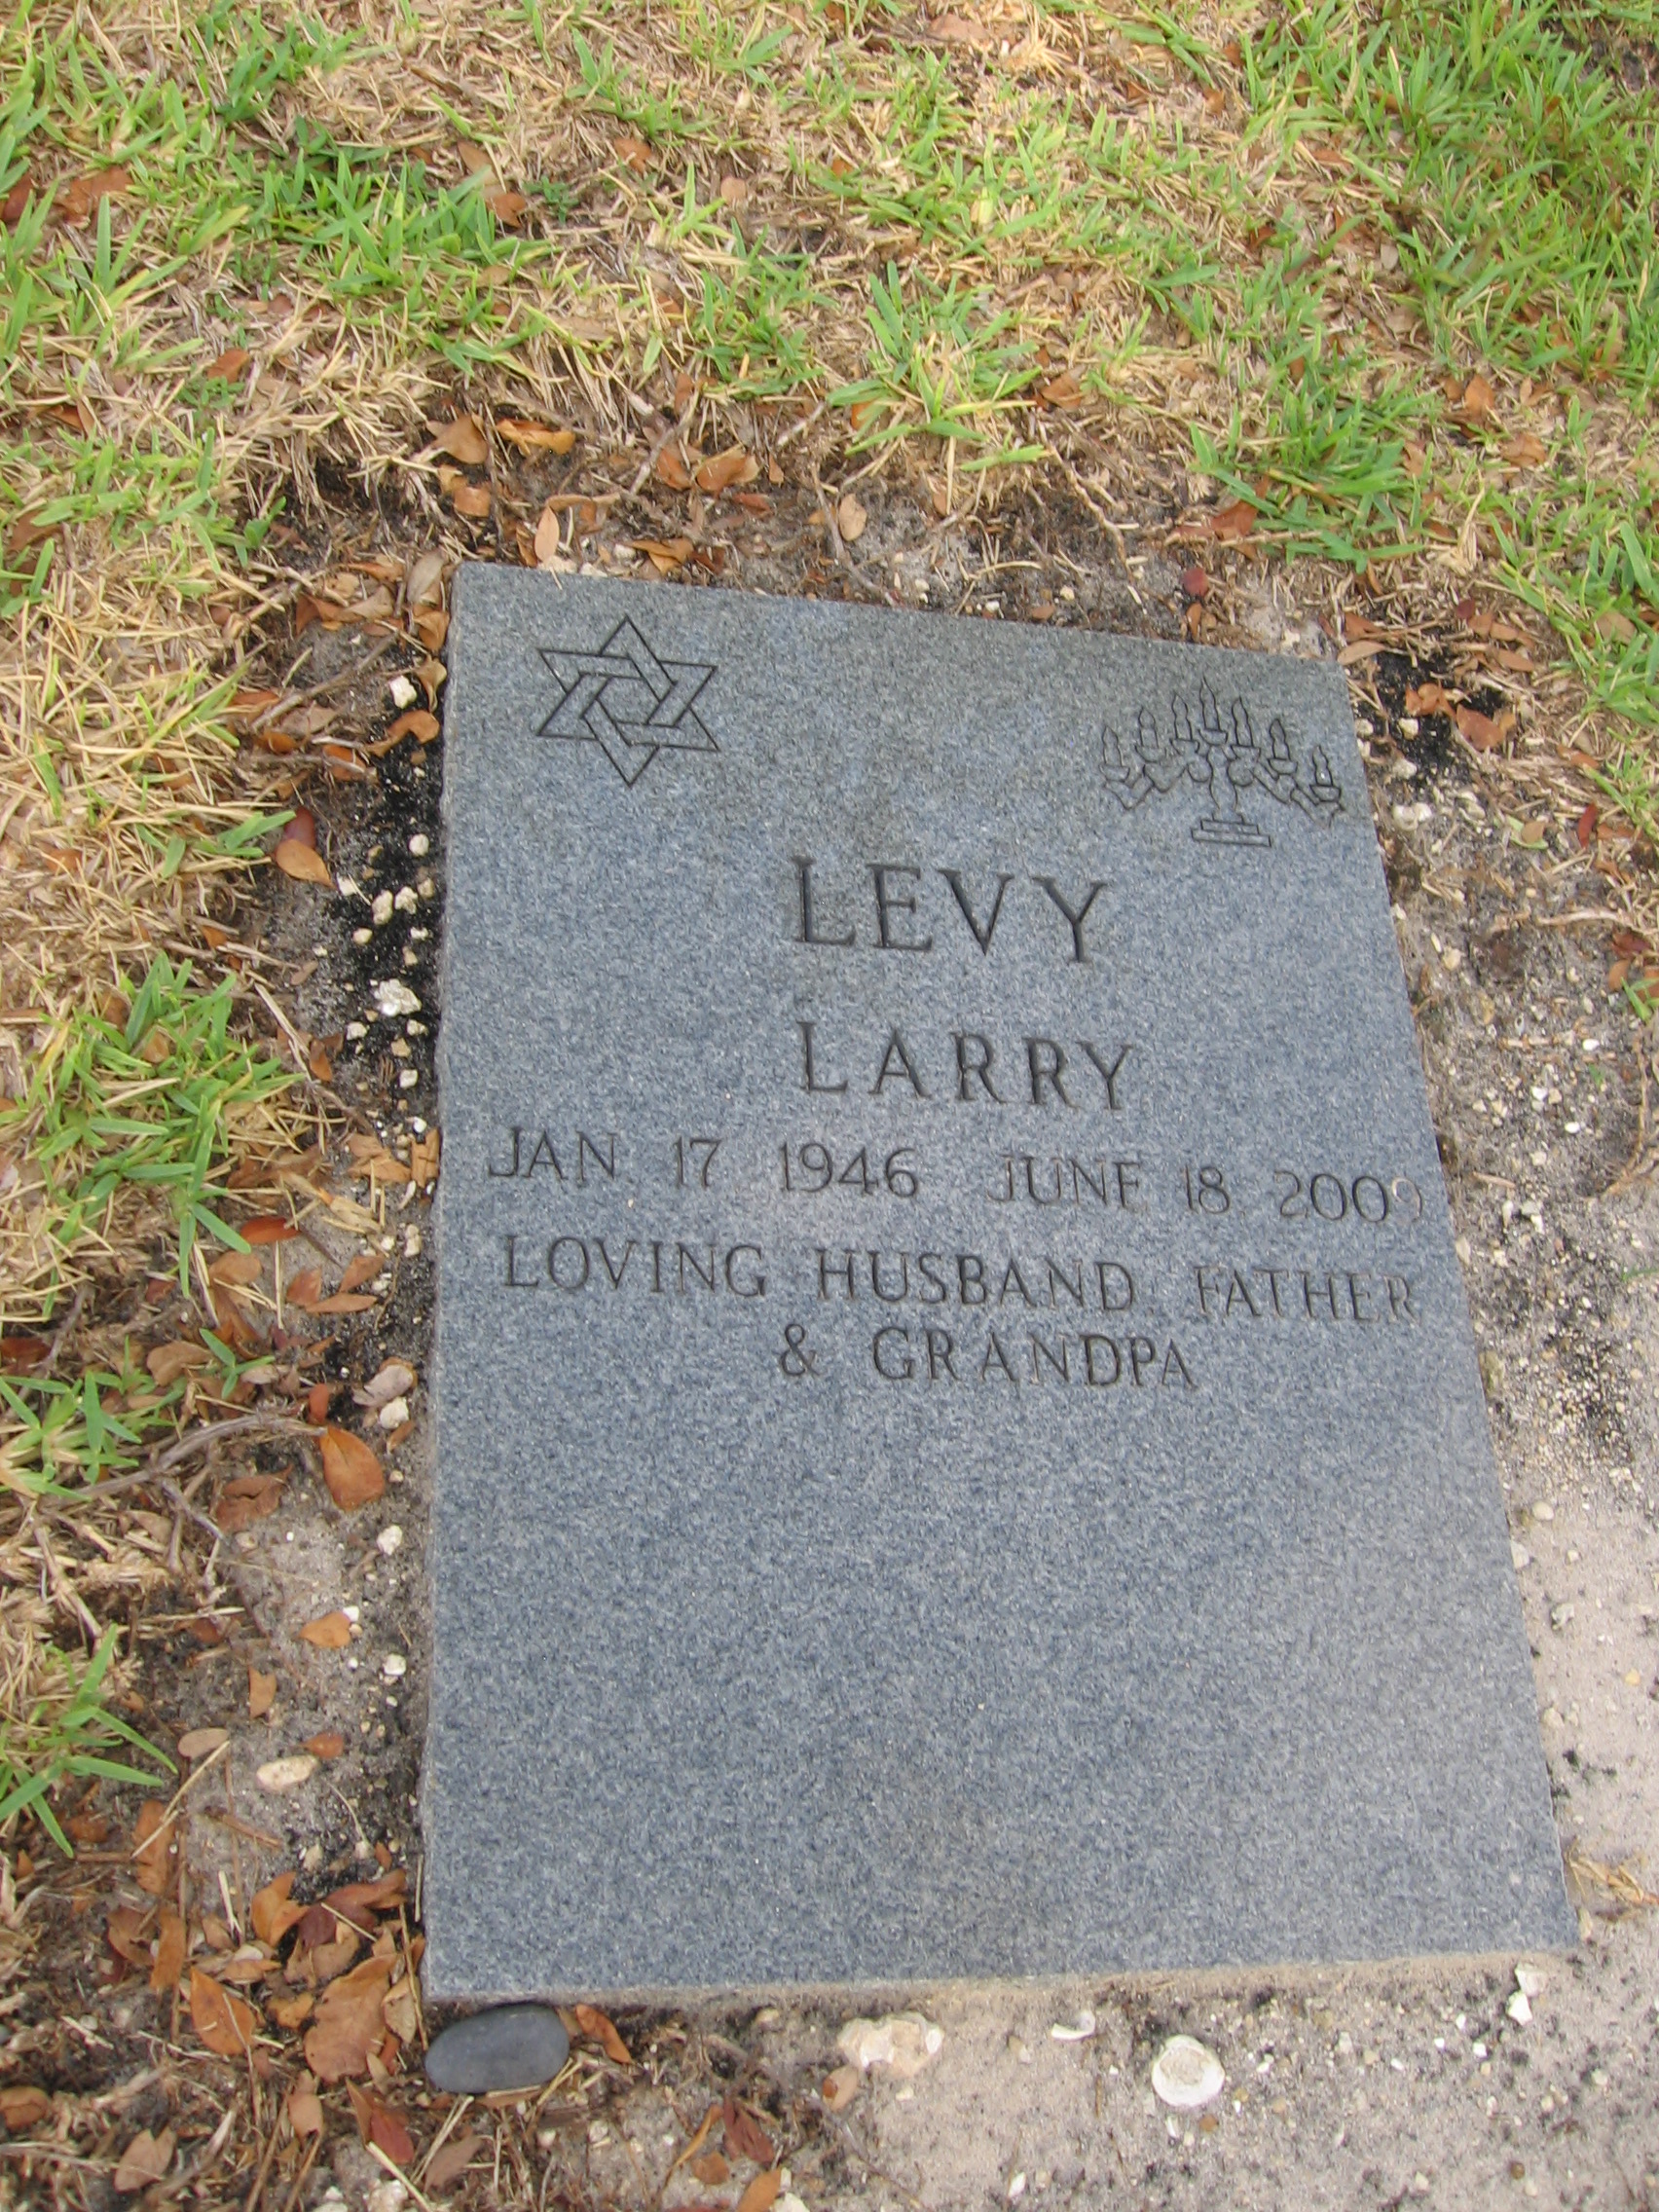 Larry Levy